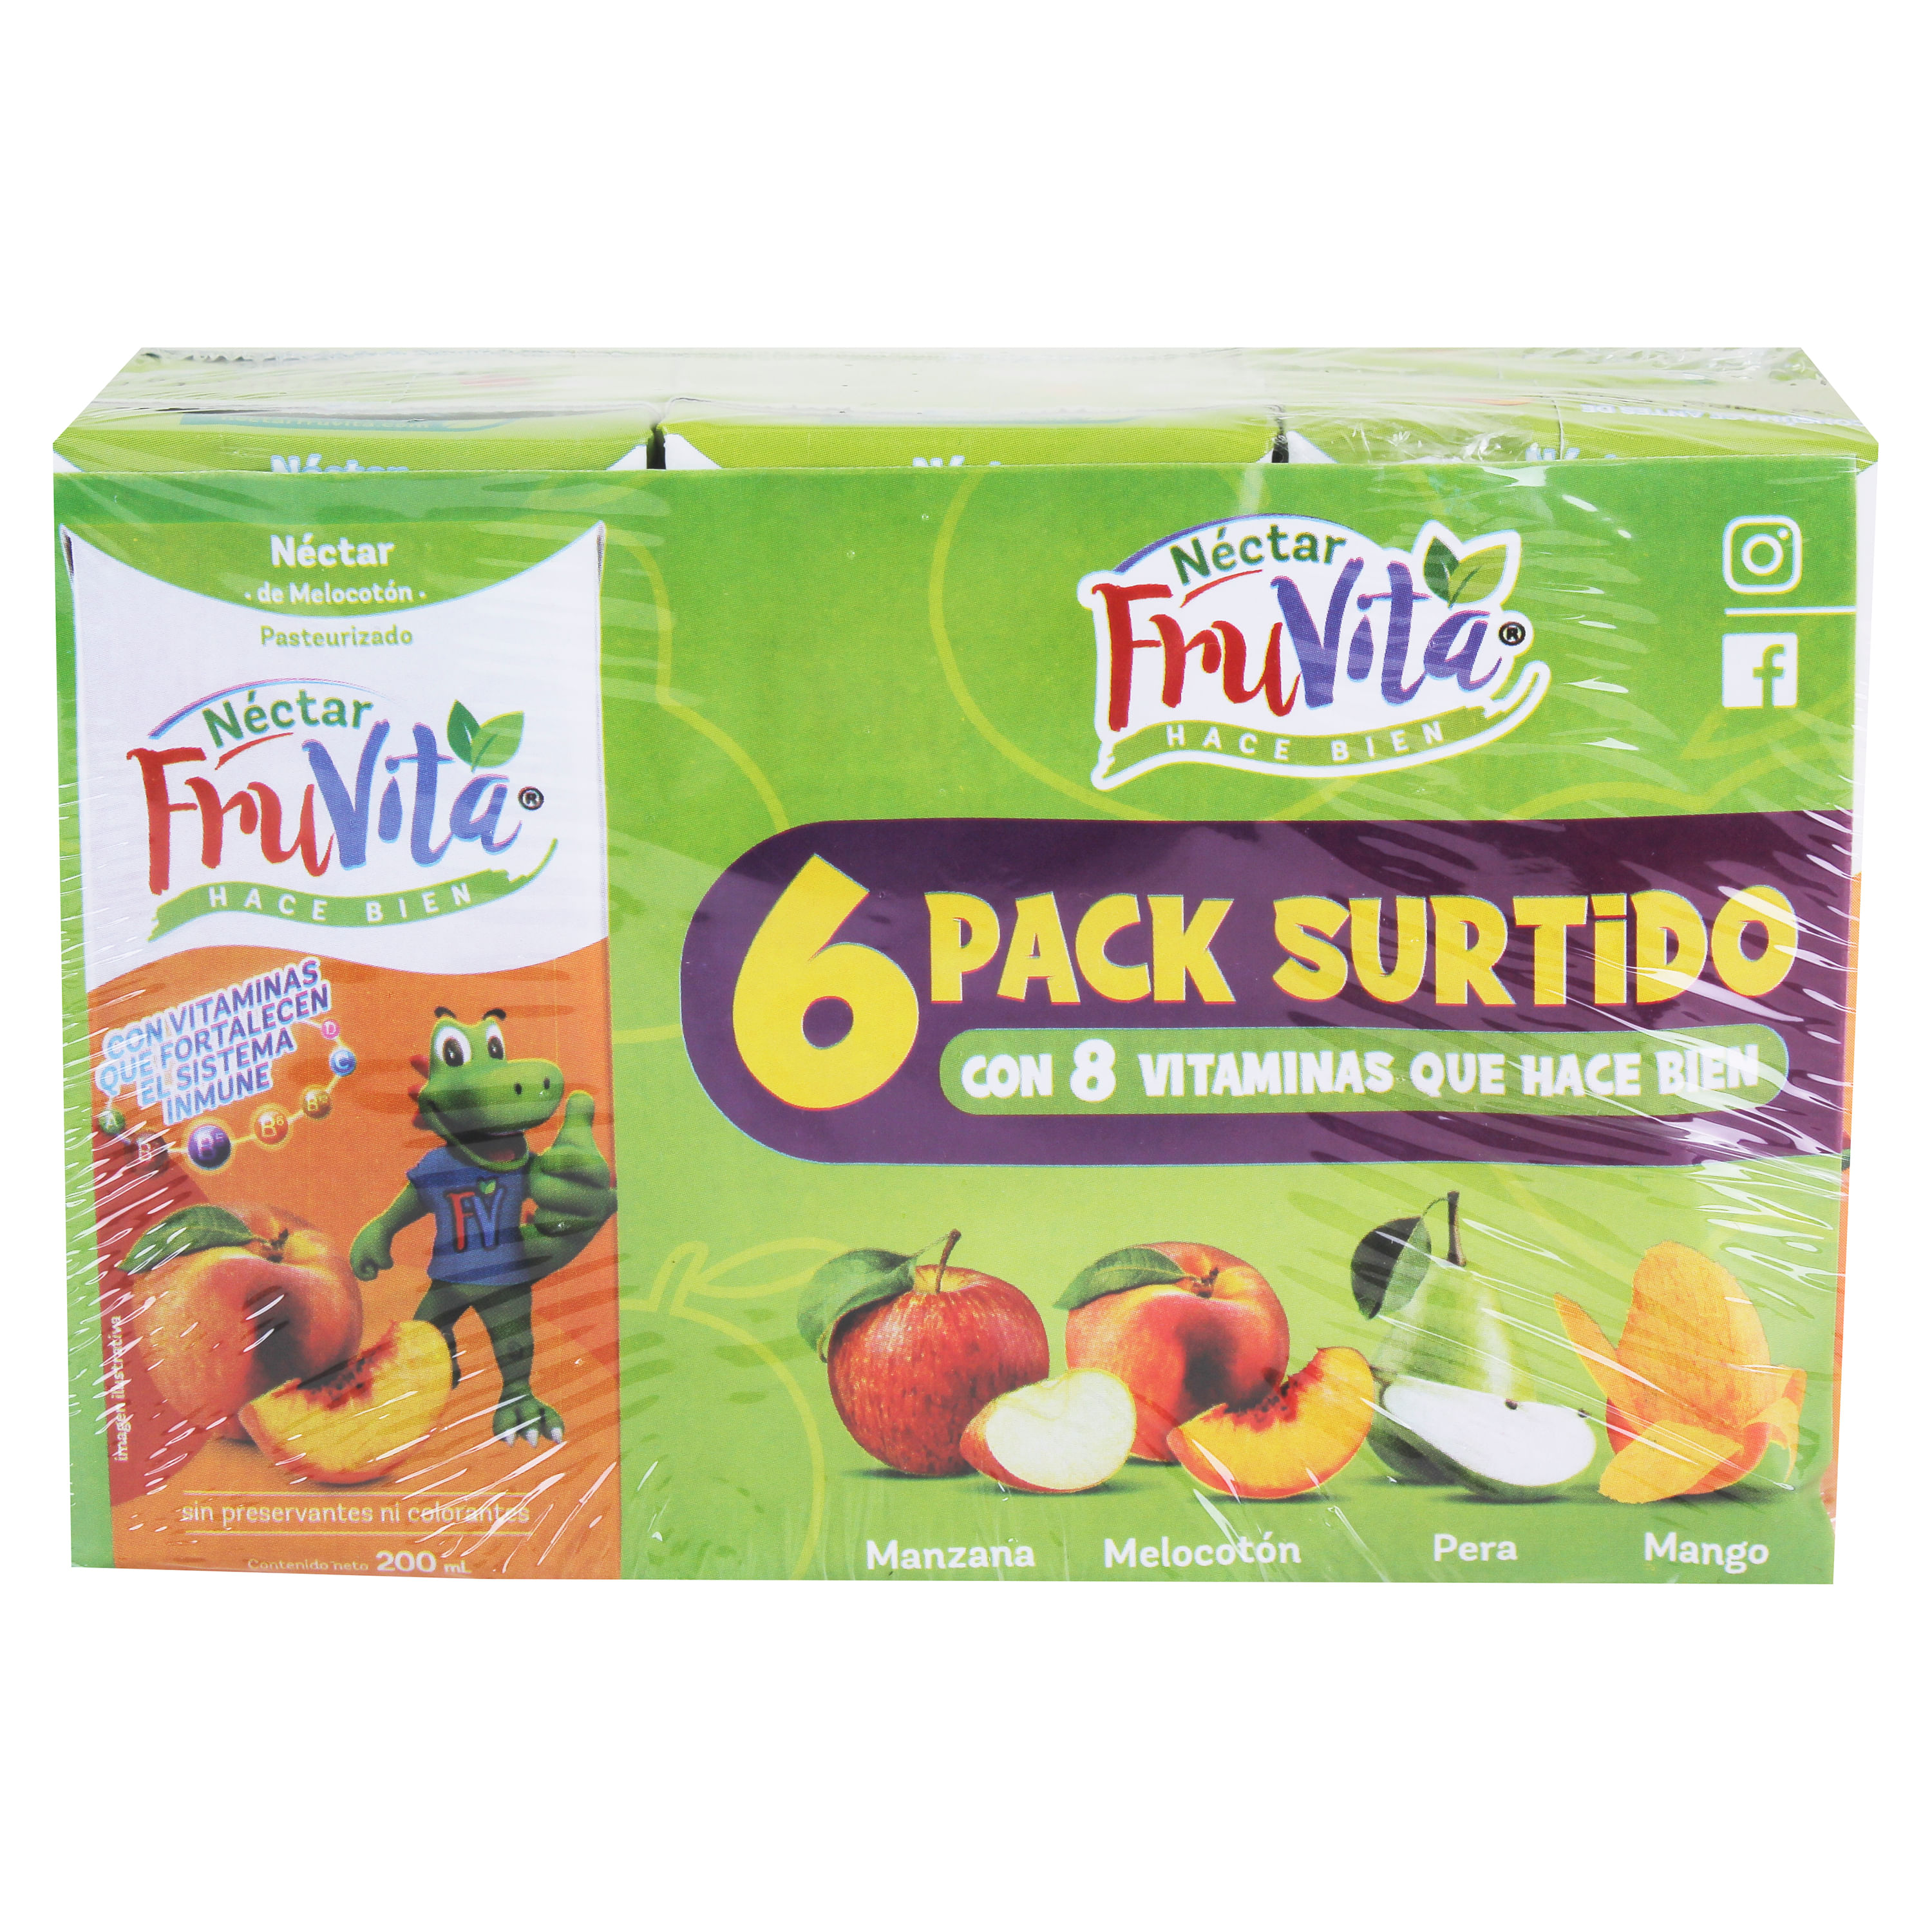 Jugos-nectar-Fruvita-6-pack-surtido-200ml-1-6089